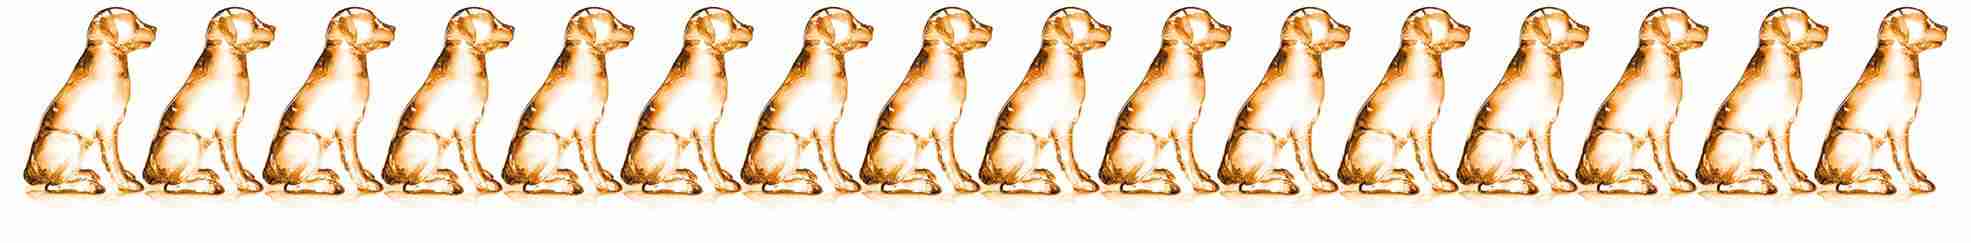 Advocate glass dogs